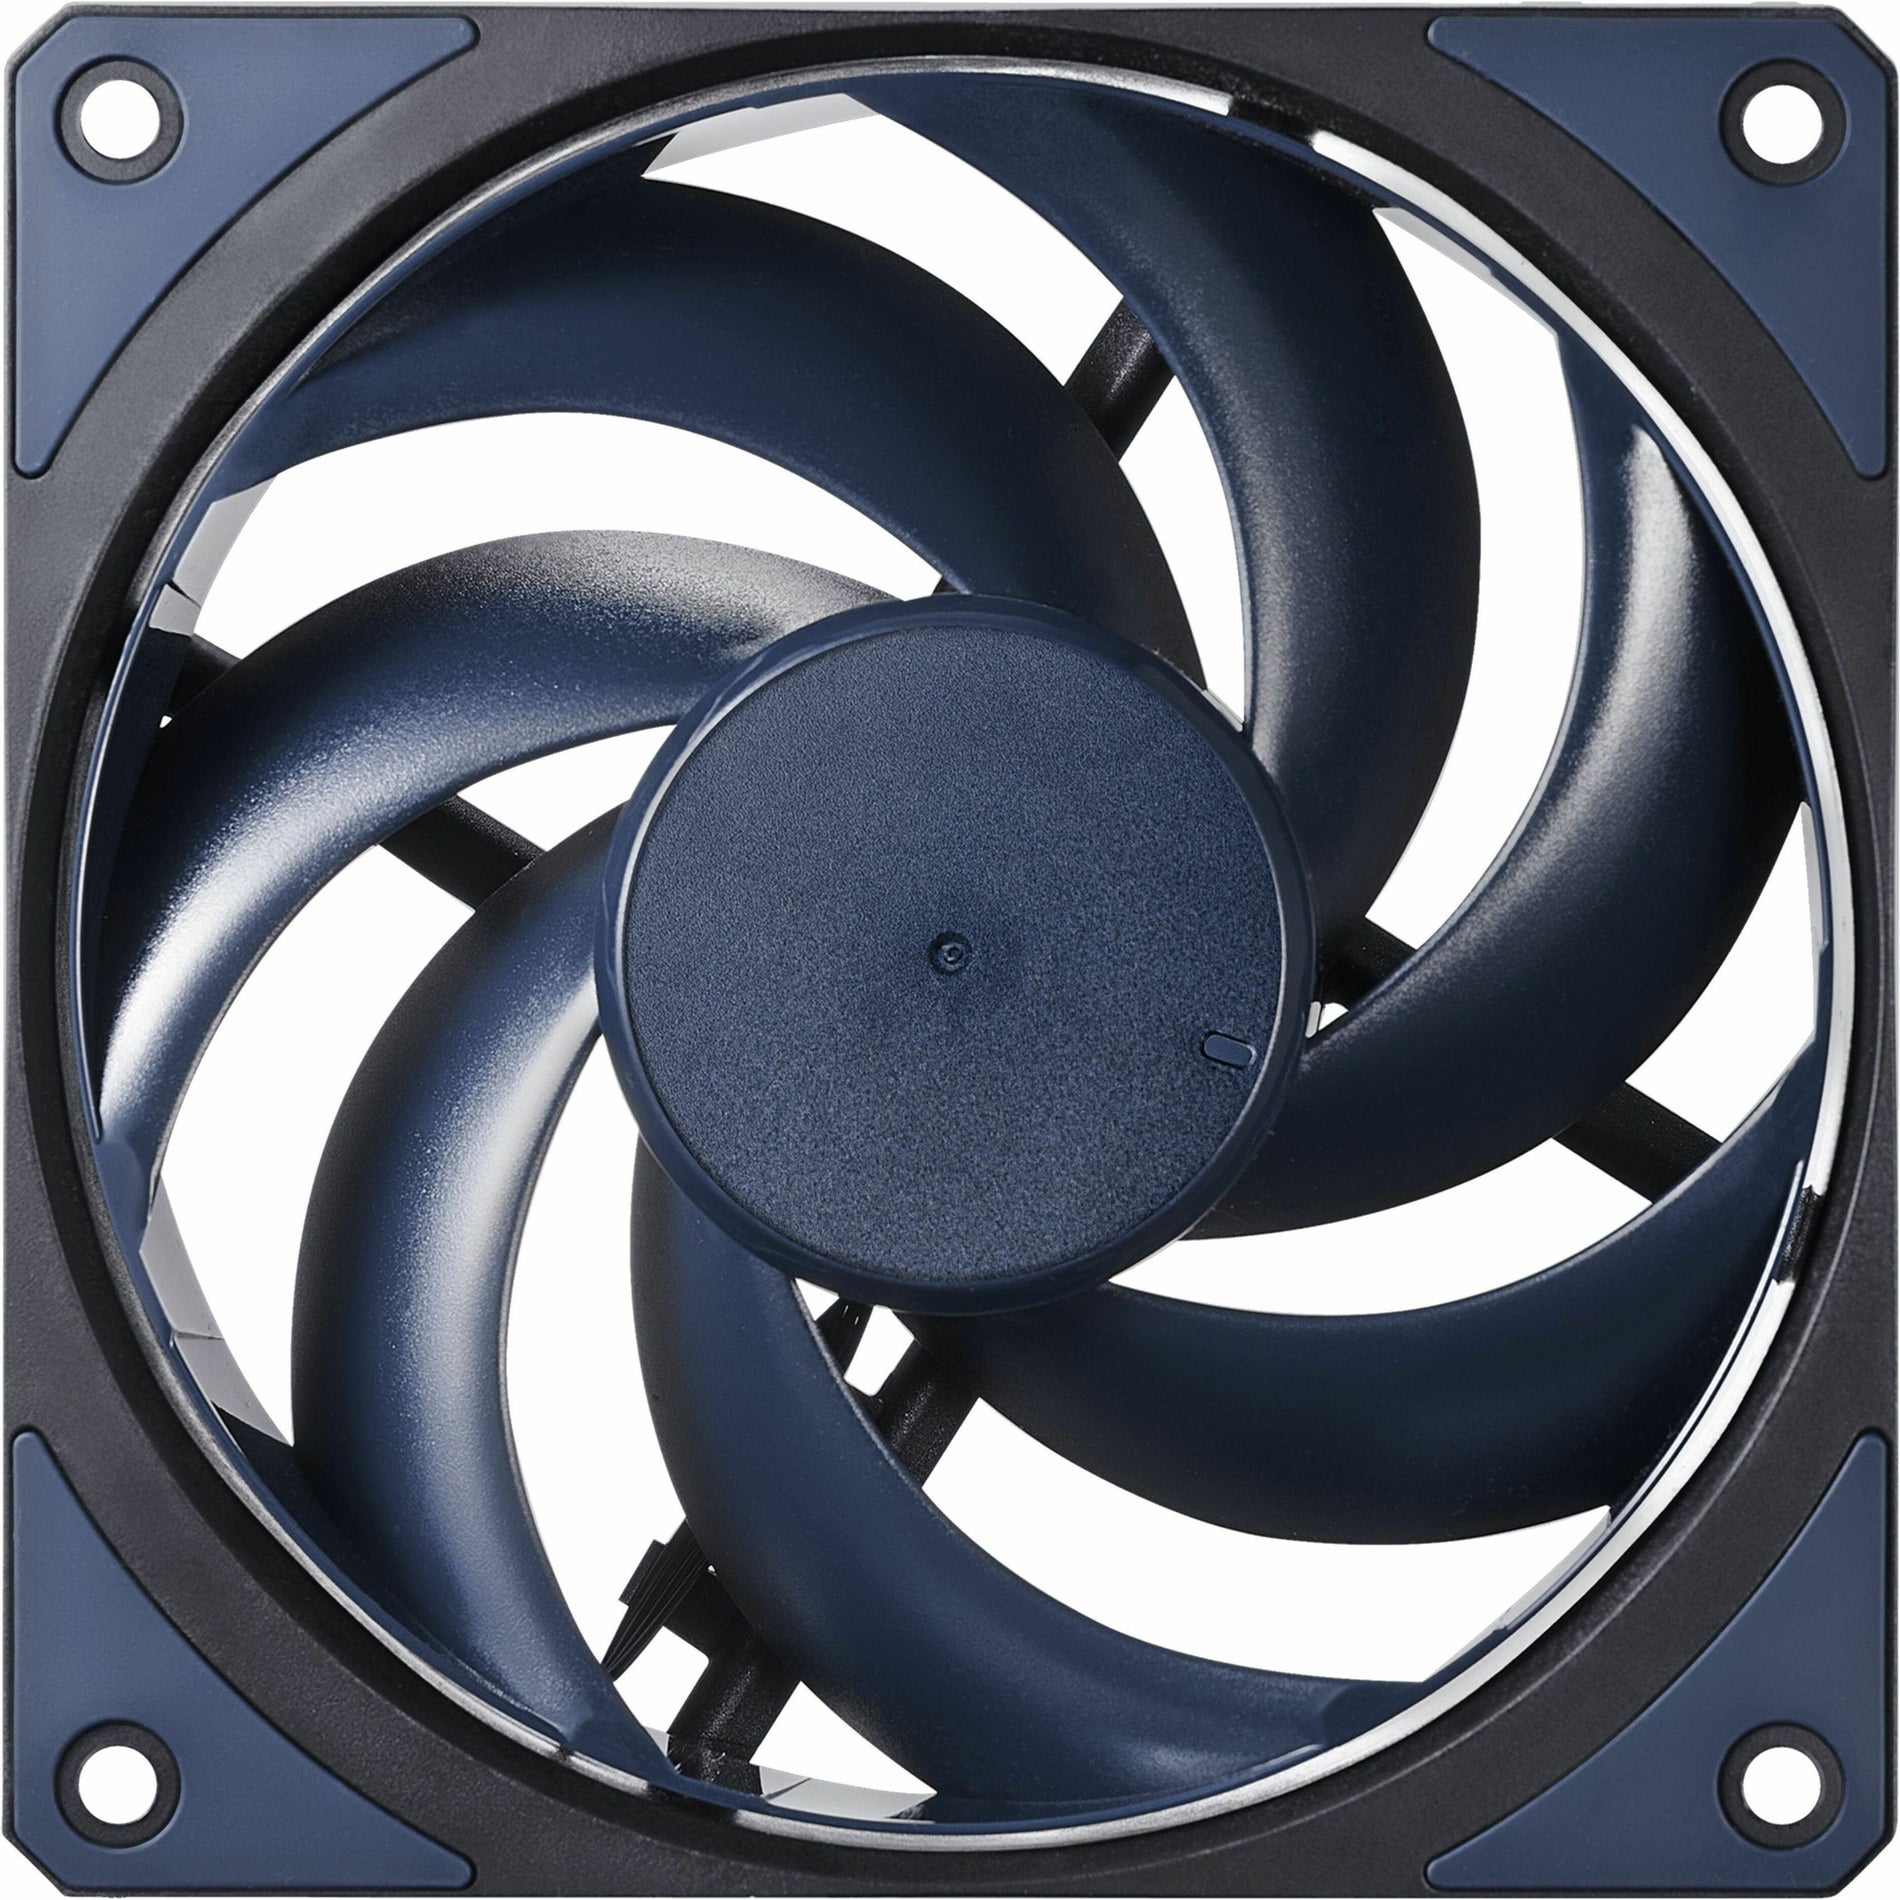 Cooler Master MFZ-M2NN-21NPK-R1 Mobius 120 Cooling Fan, 5-Year Warranty, High Airflow, Low Noise